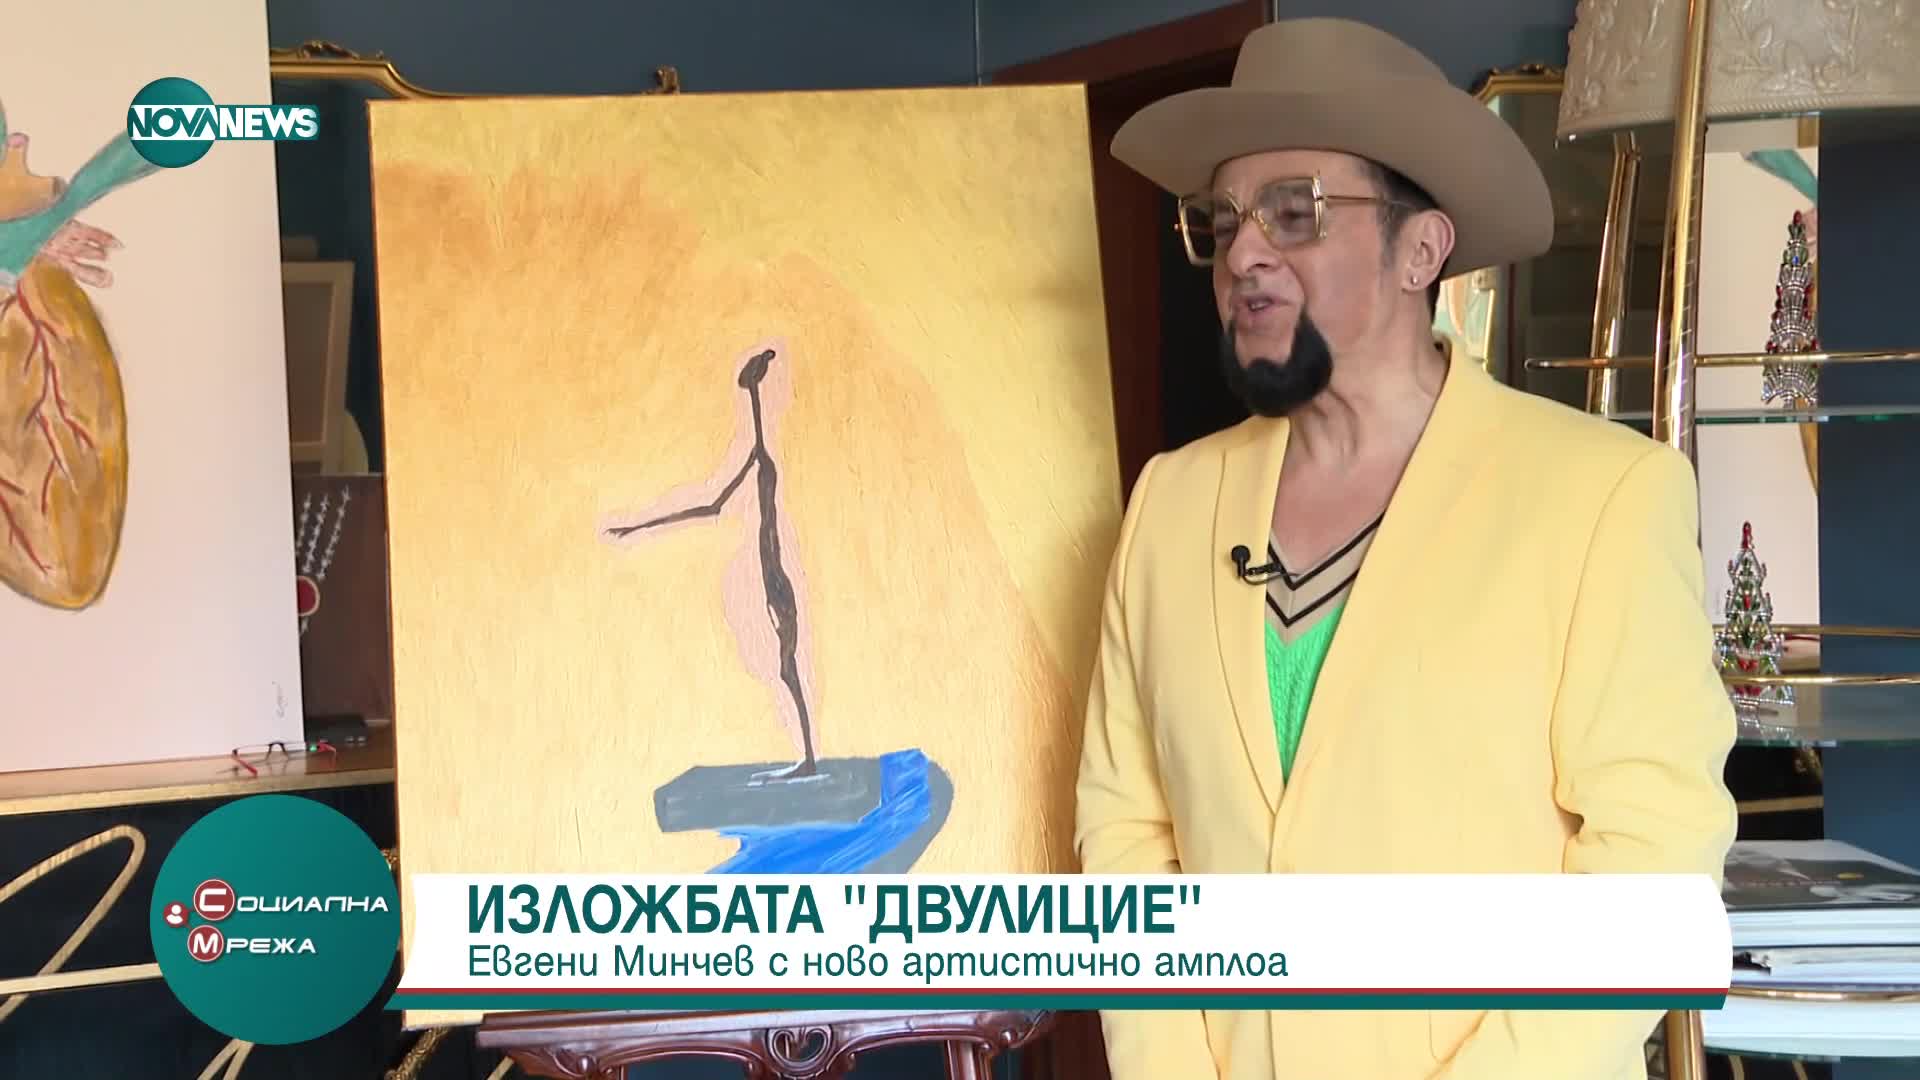 Евгени Минчев с ново артистично амплоа